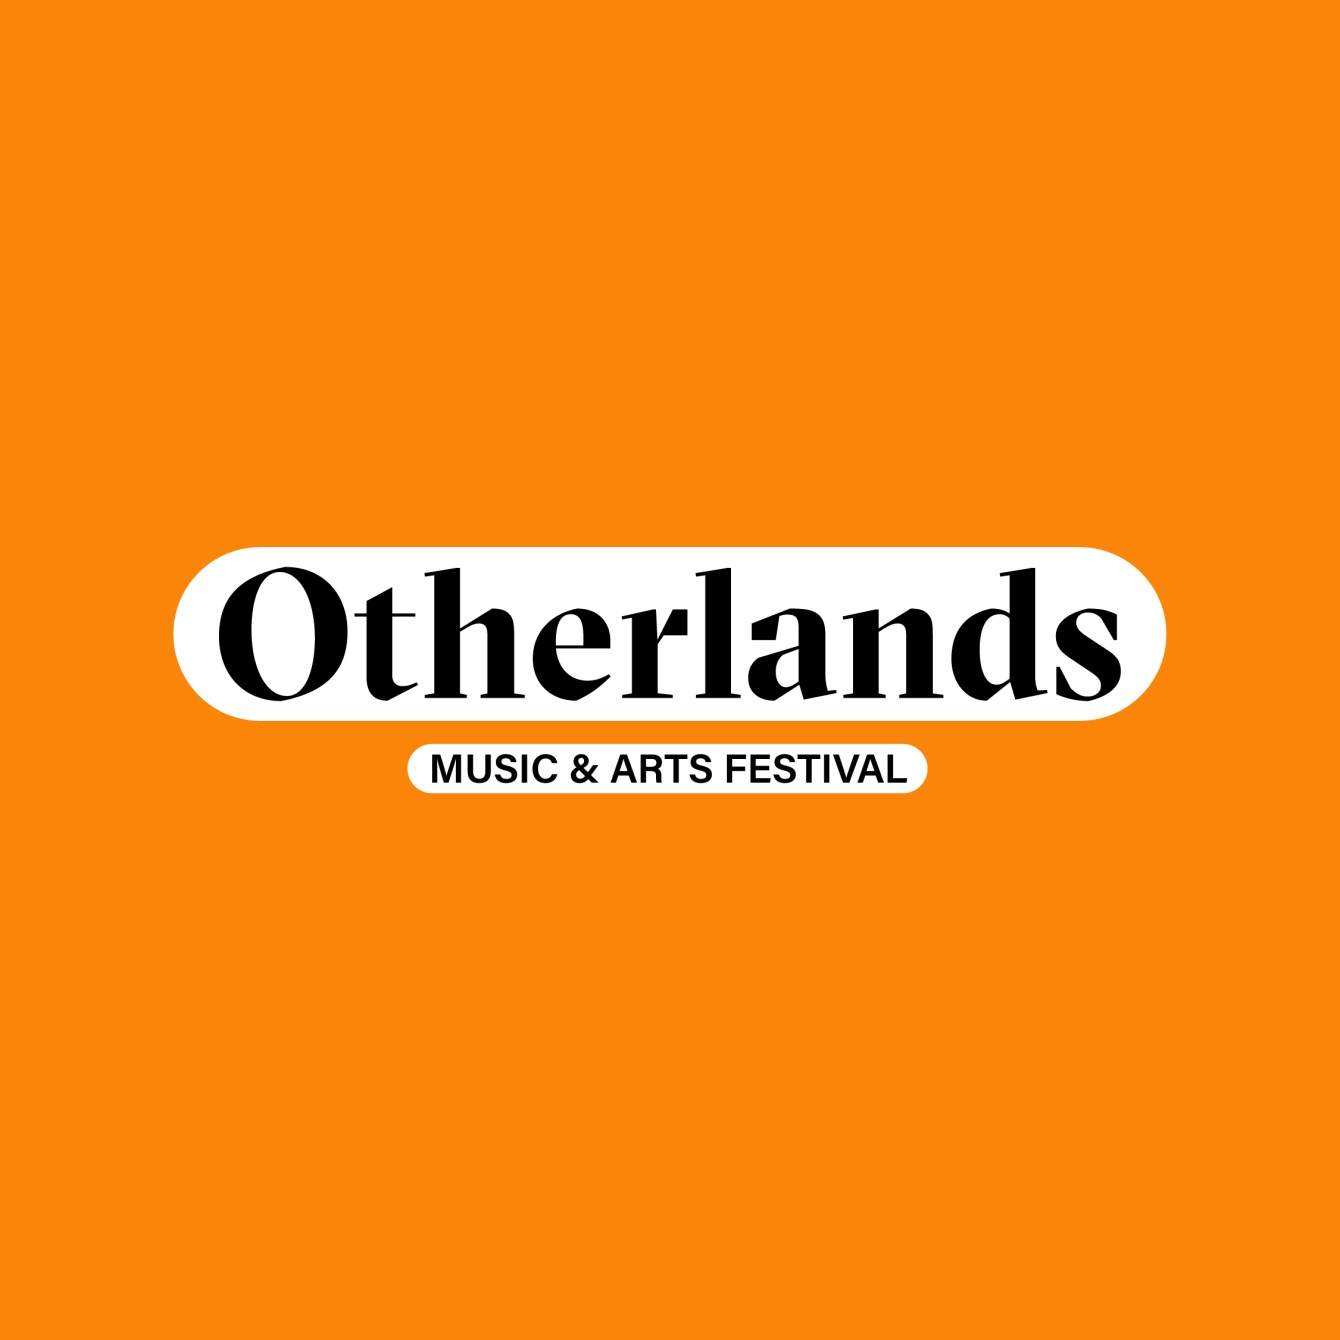 Otherlands Music & Arts Festival - フライヤー裏